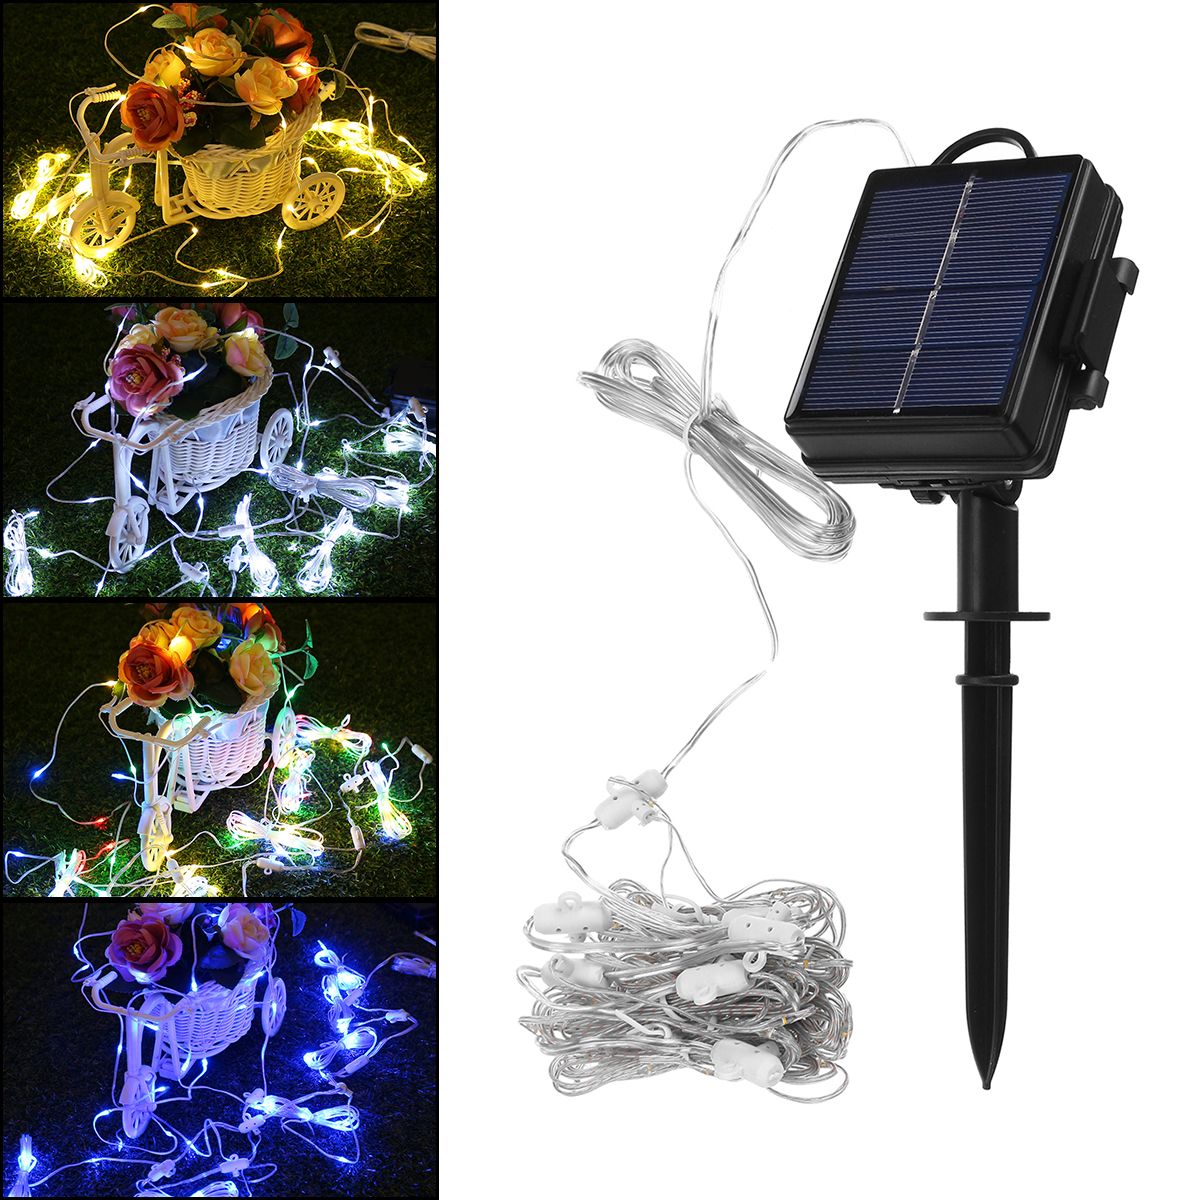 08M13M-104LED-Solar-Umbrella-String-Light-Battery-Powered-Garden-Patio-Fairy-Lamp-Party-Holiday-Chri-1719780